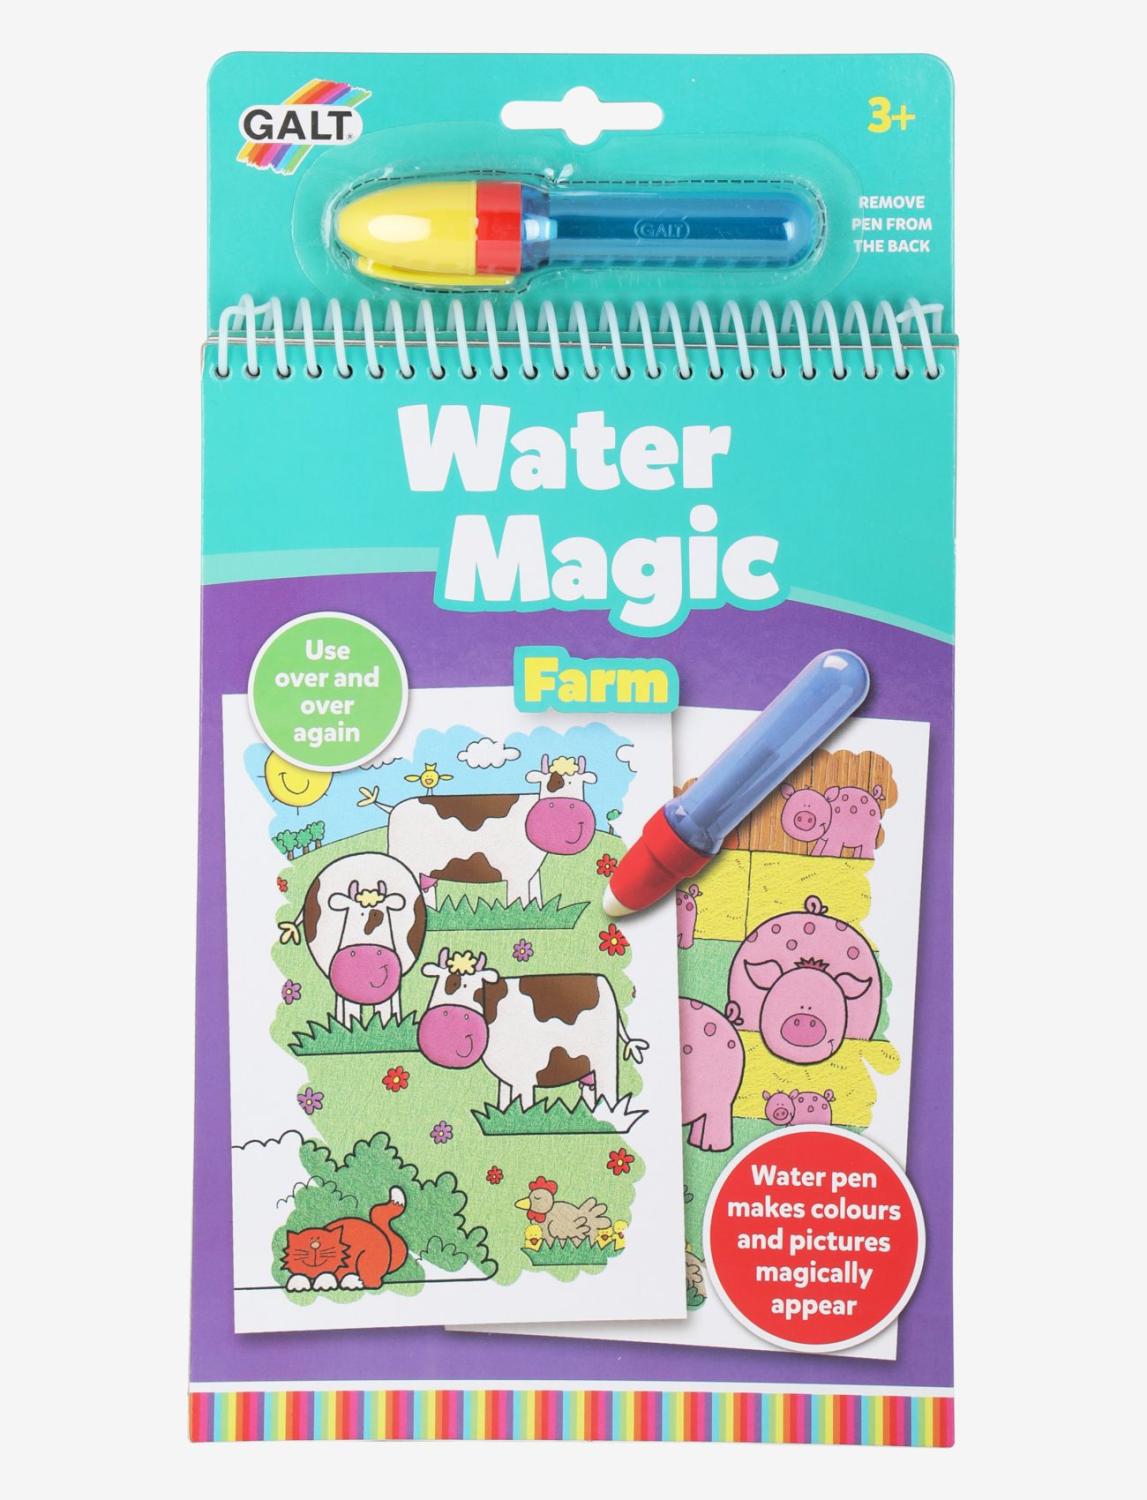 Water magic - Farm